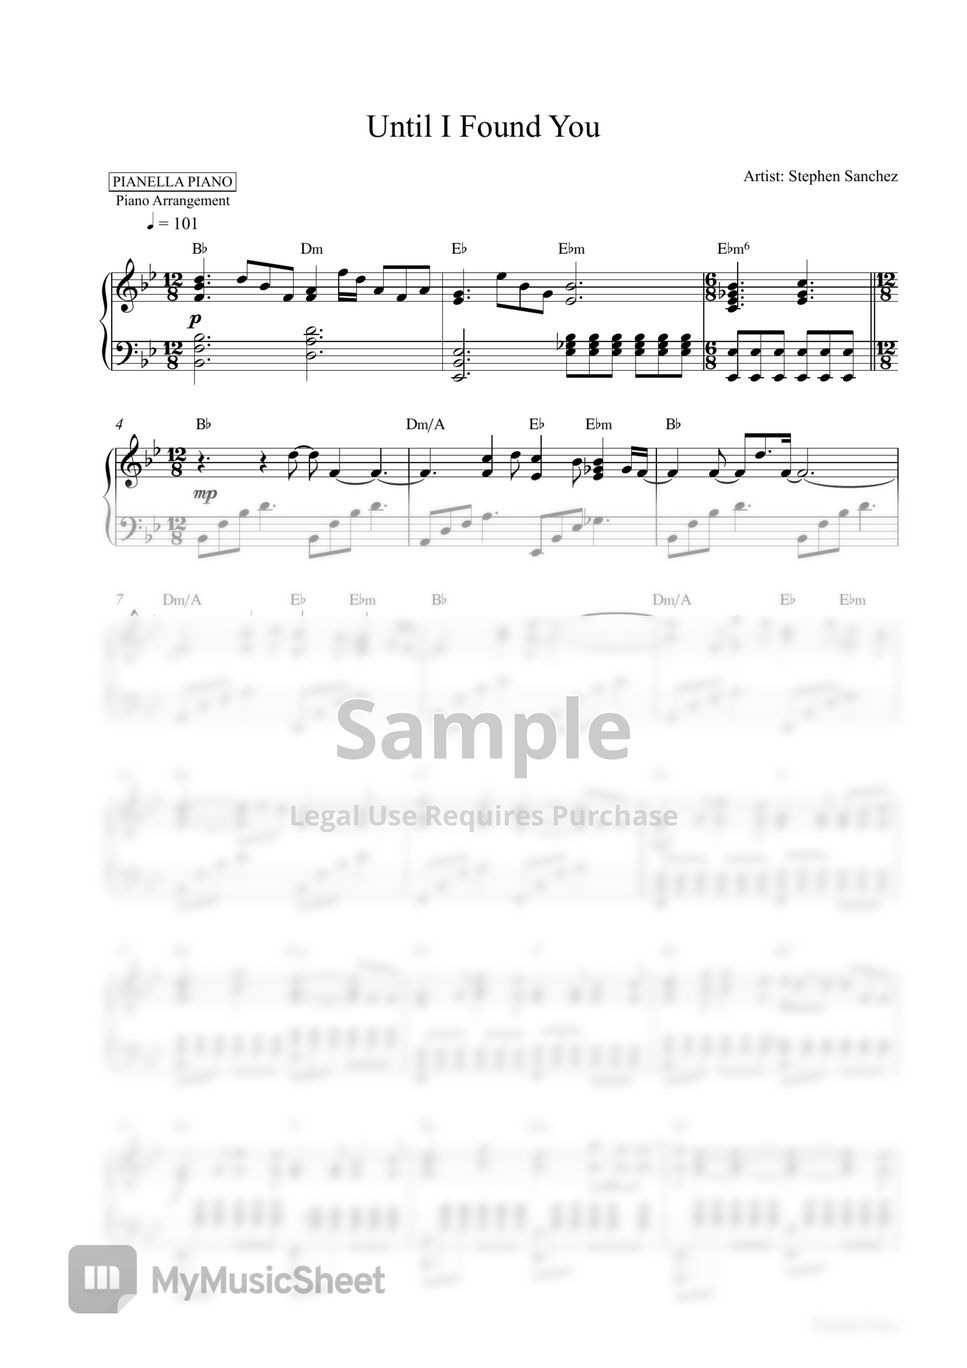 Stephen Sanchez - Until I Found You (Piano Sheet) by Pianella Piano